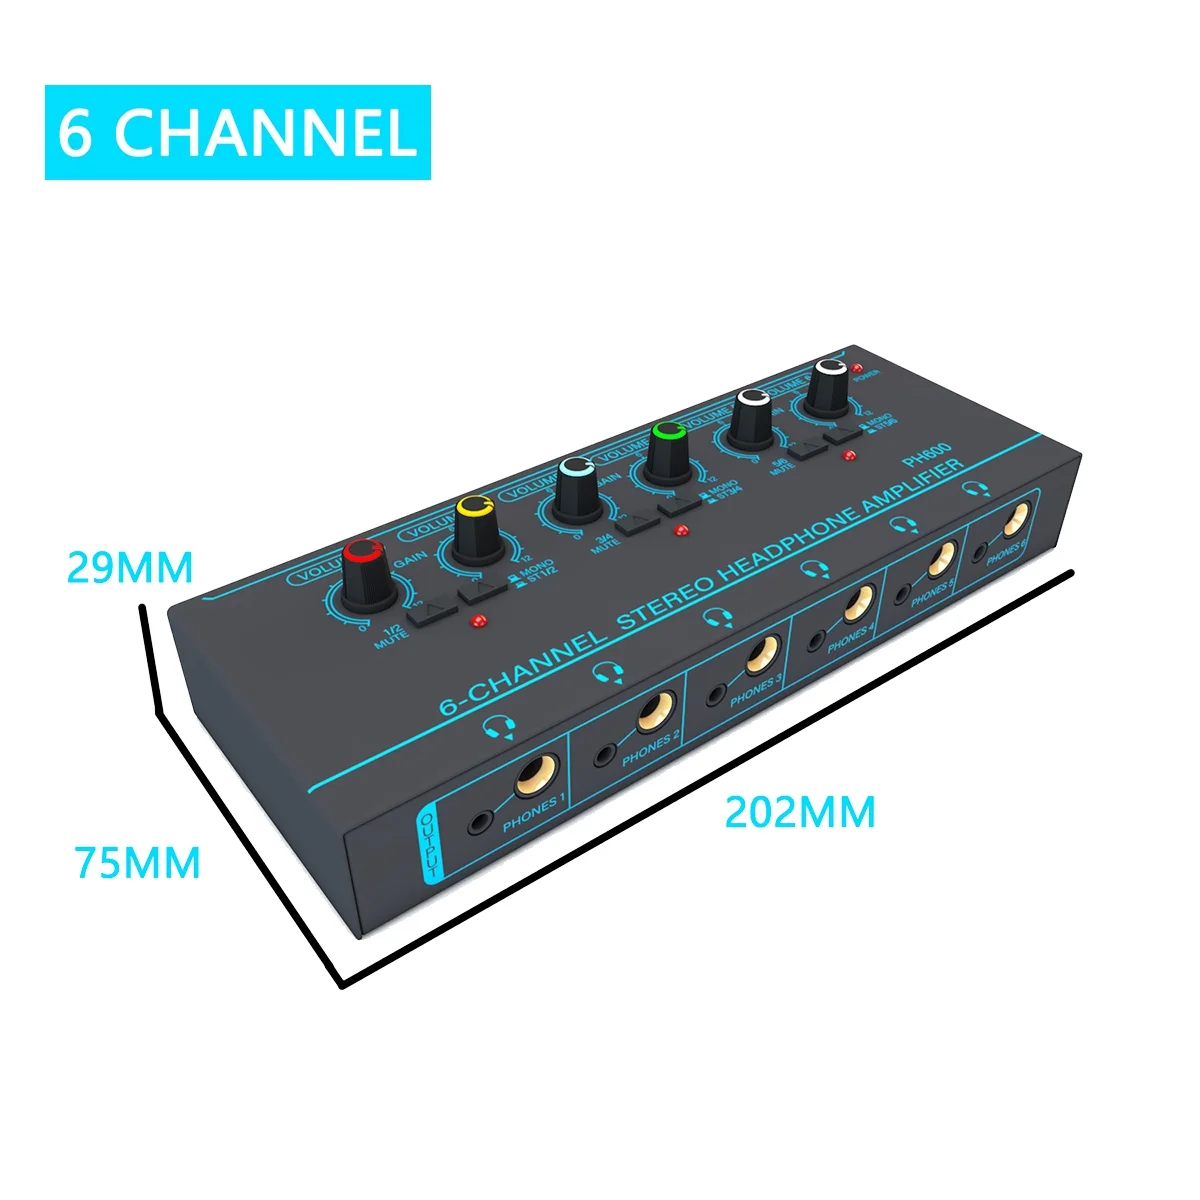 6 Channels Stereo Headphone Amplifier Mini Portable Earphone Splitter Low-Noise Audio Mixer for Recording Studio,Blue images - 6